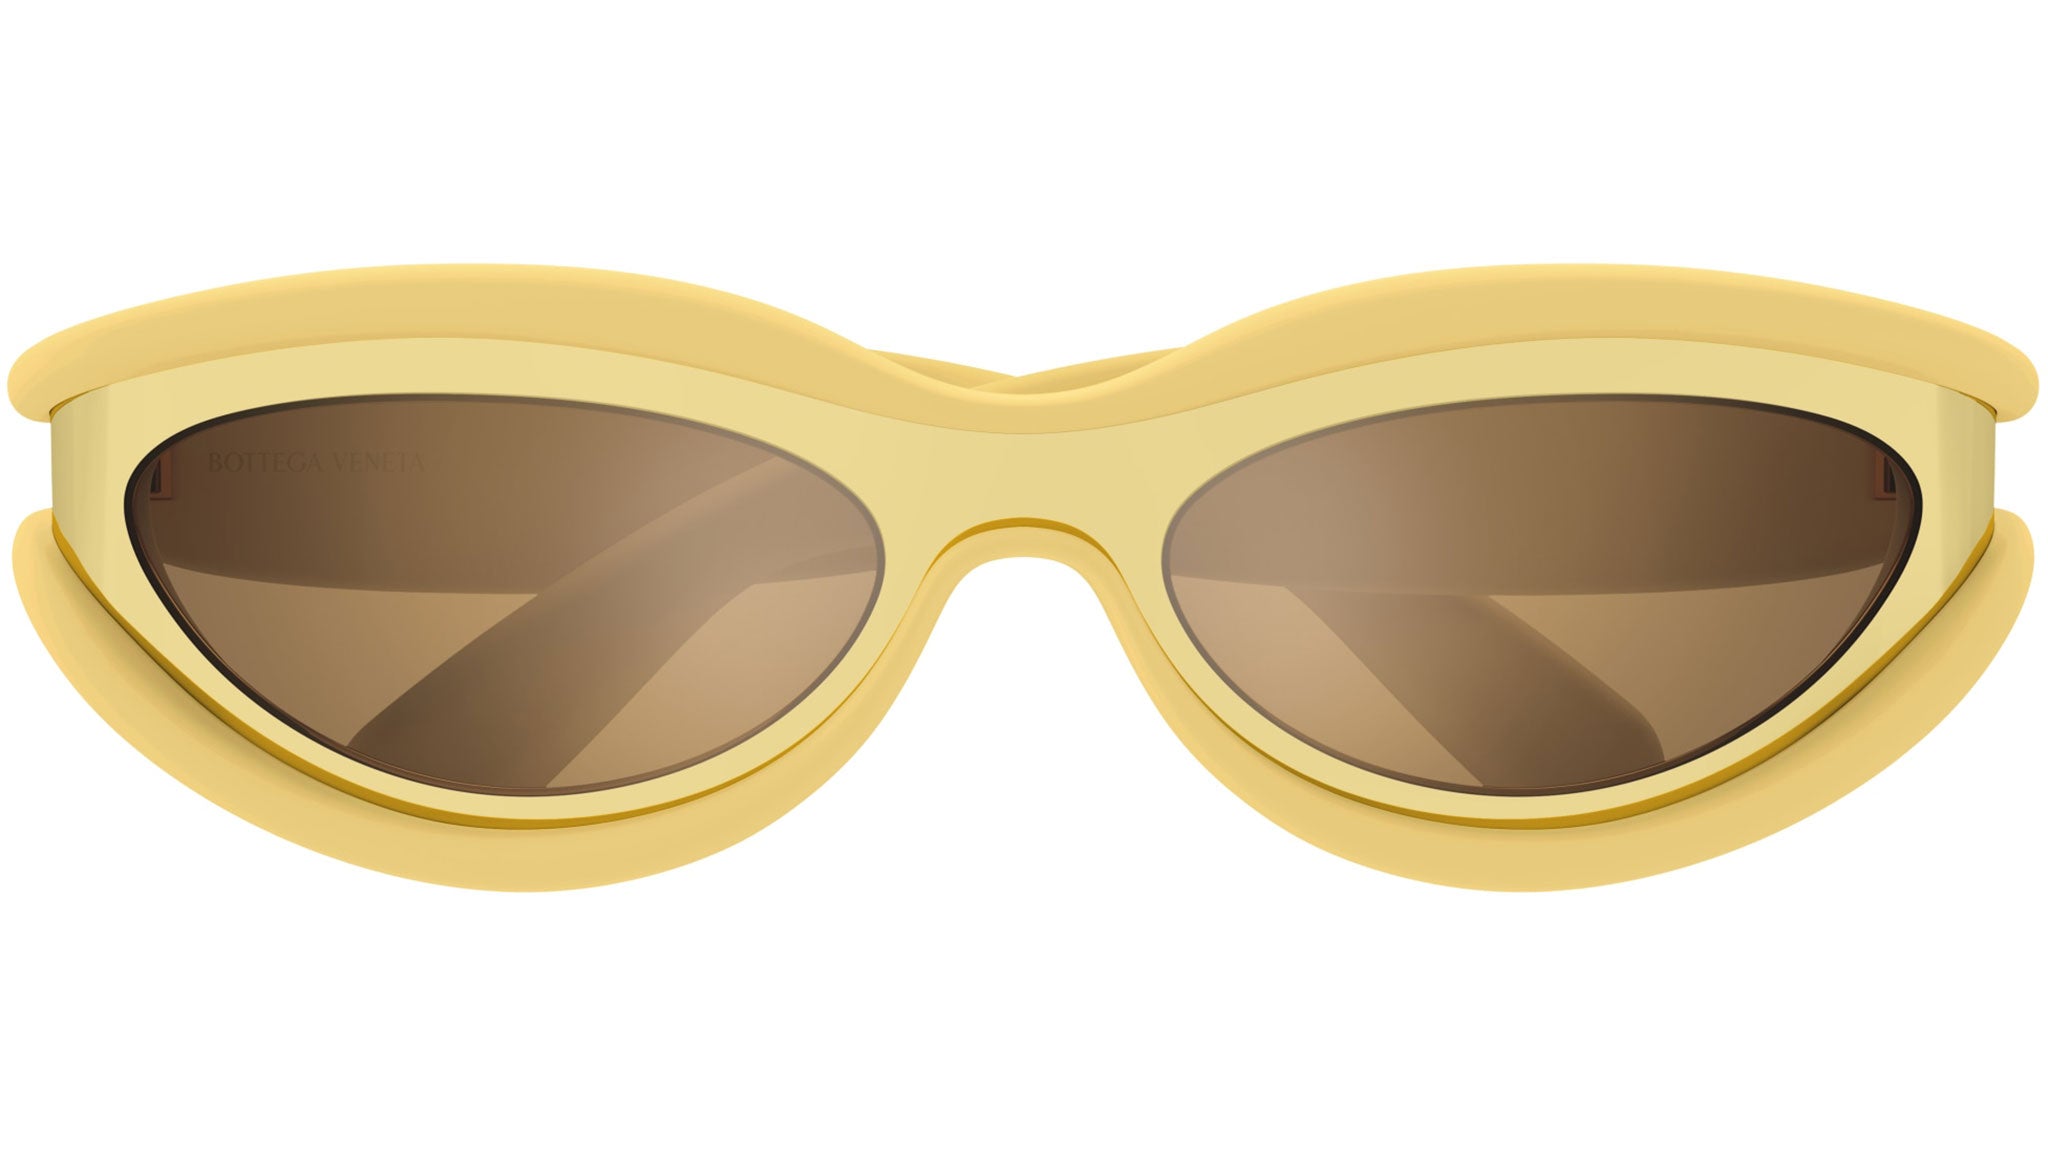 Bottega Veneta® Men's Classic Square Sunglasses in Havana / Brown